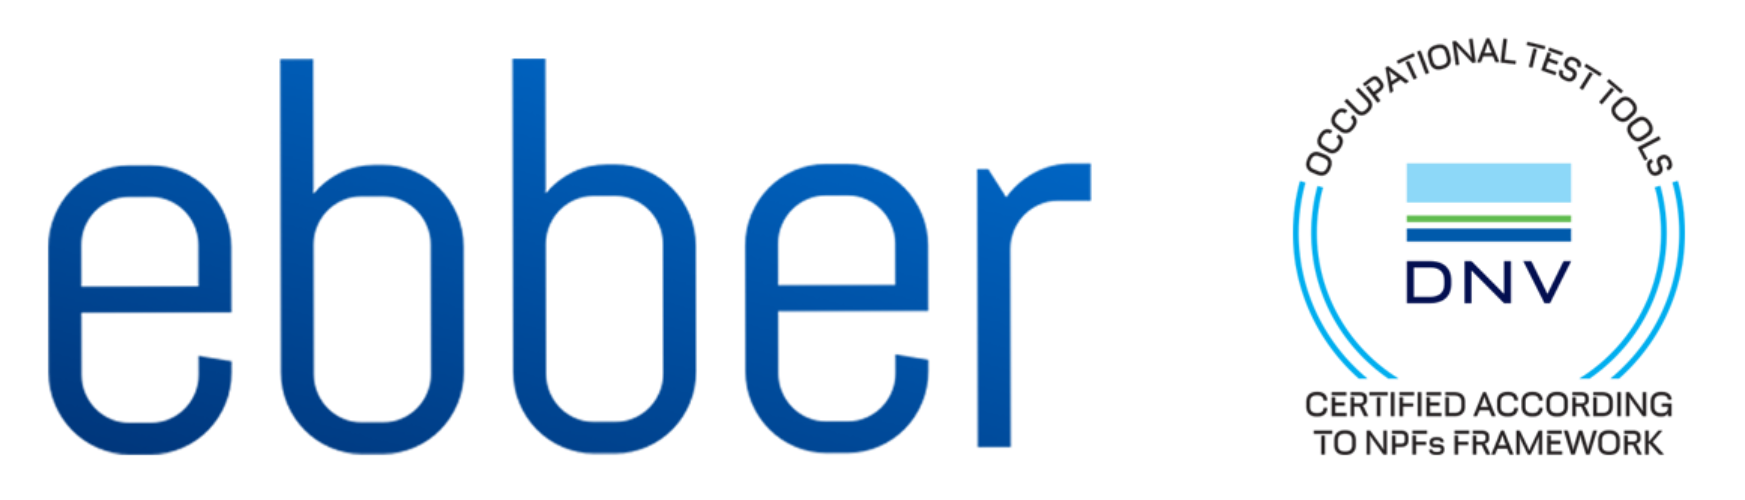 Ebber logo